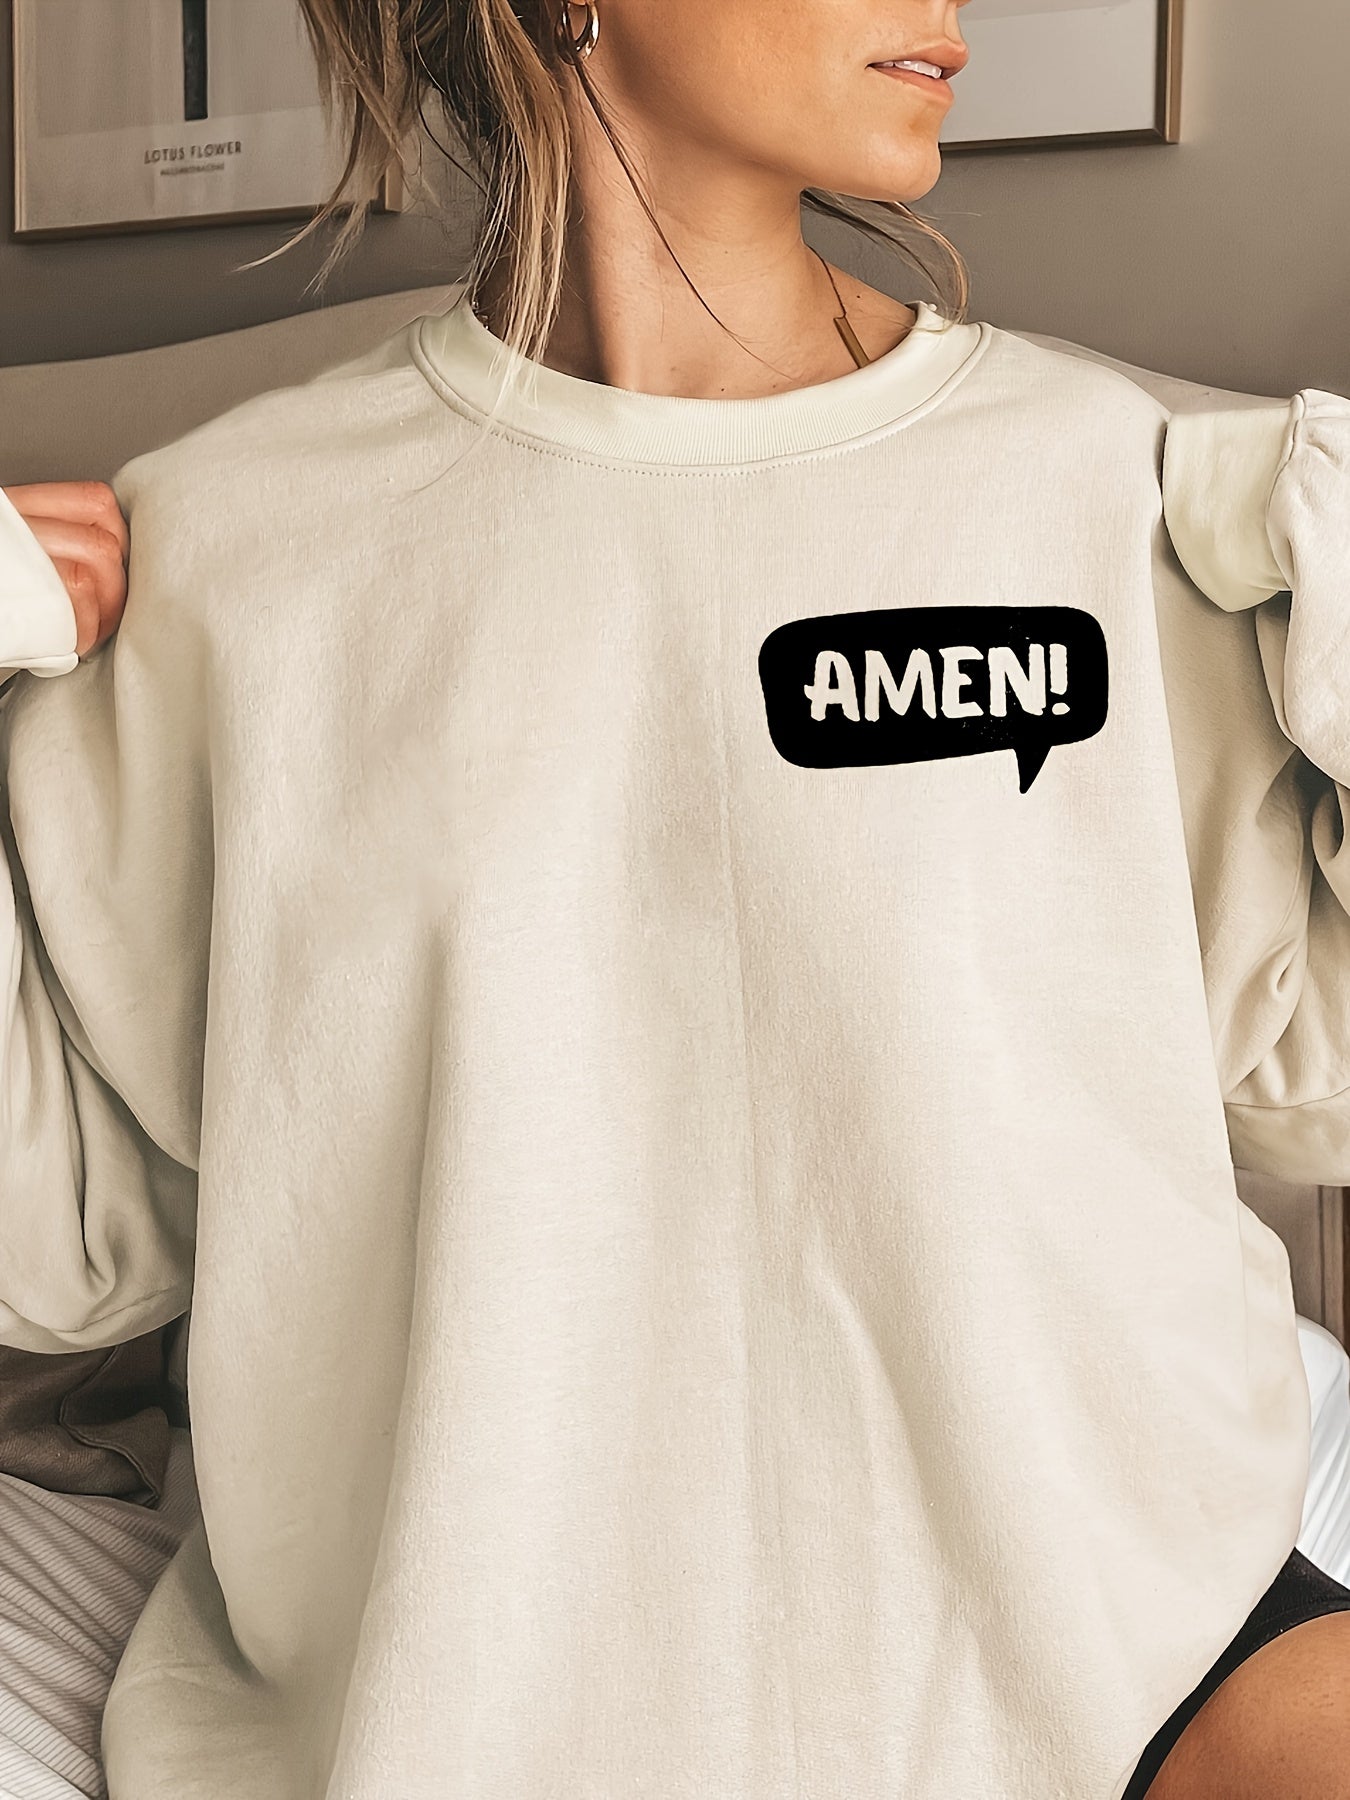 Amen! FAITH OVER FEAR Women's Christian Pullover Sweatshirt claimedbygoddesigns